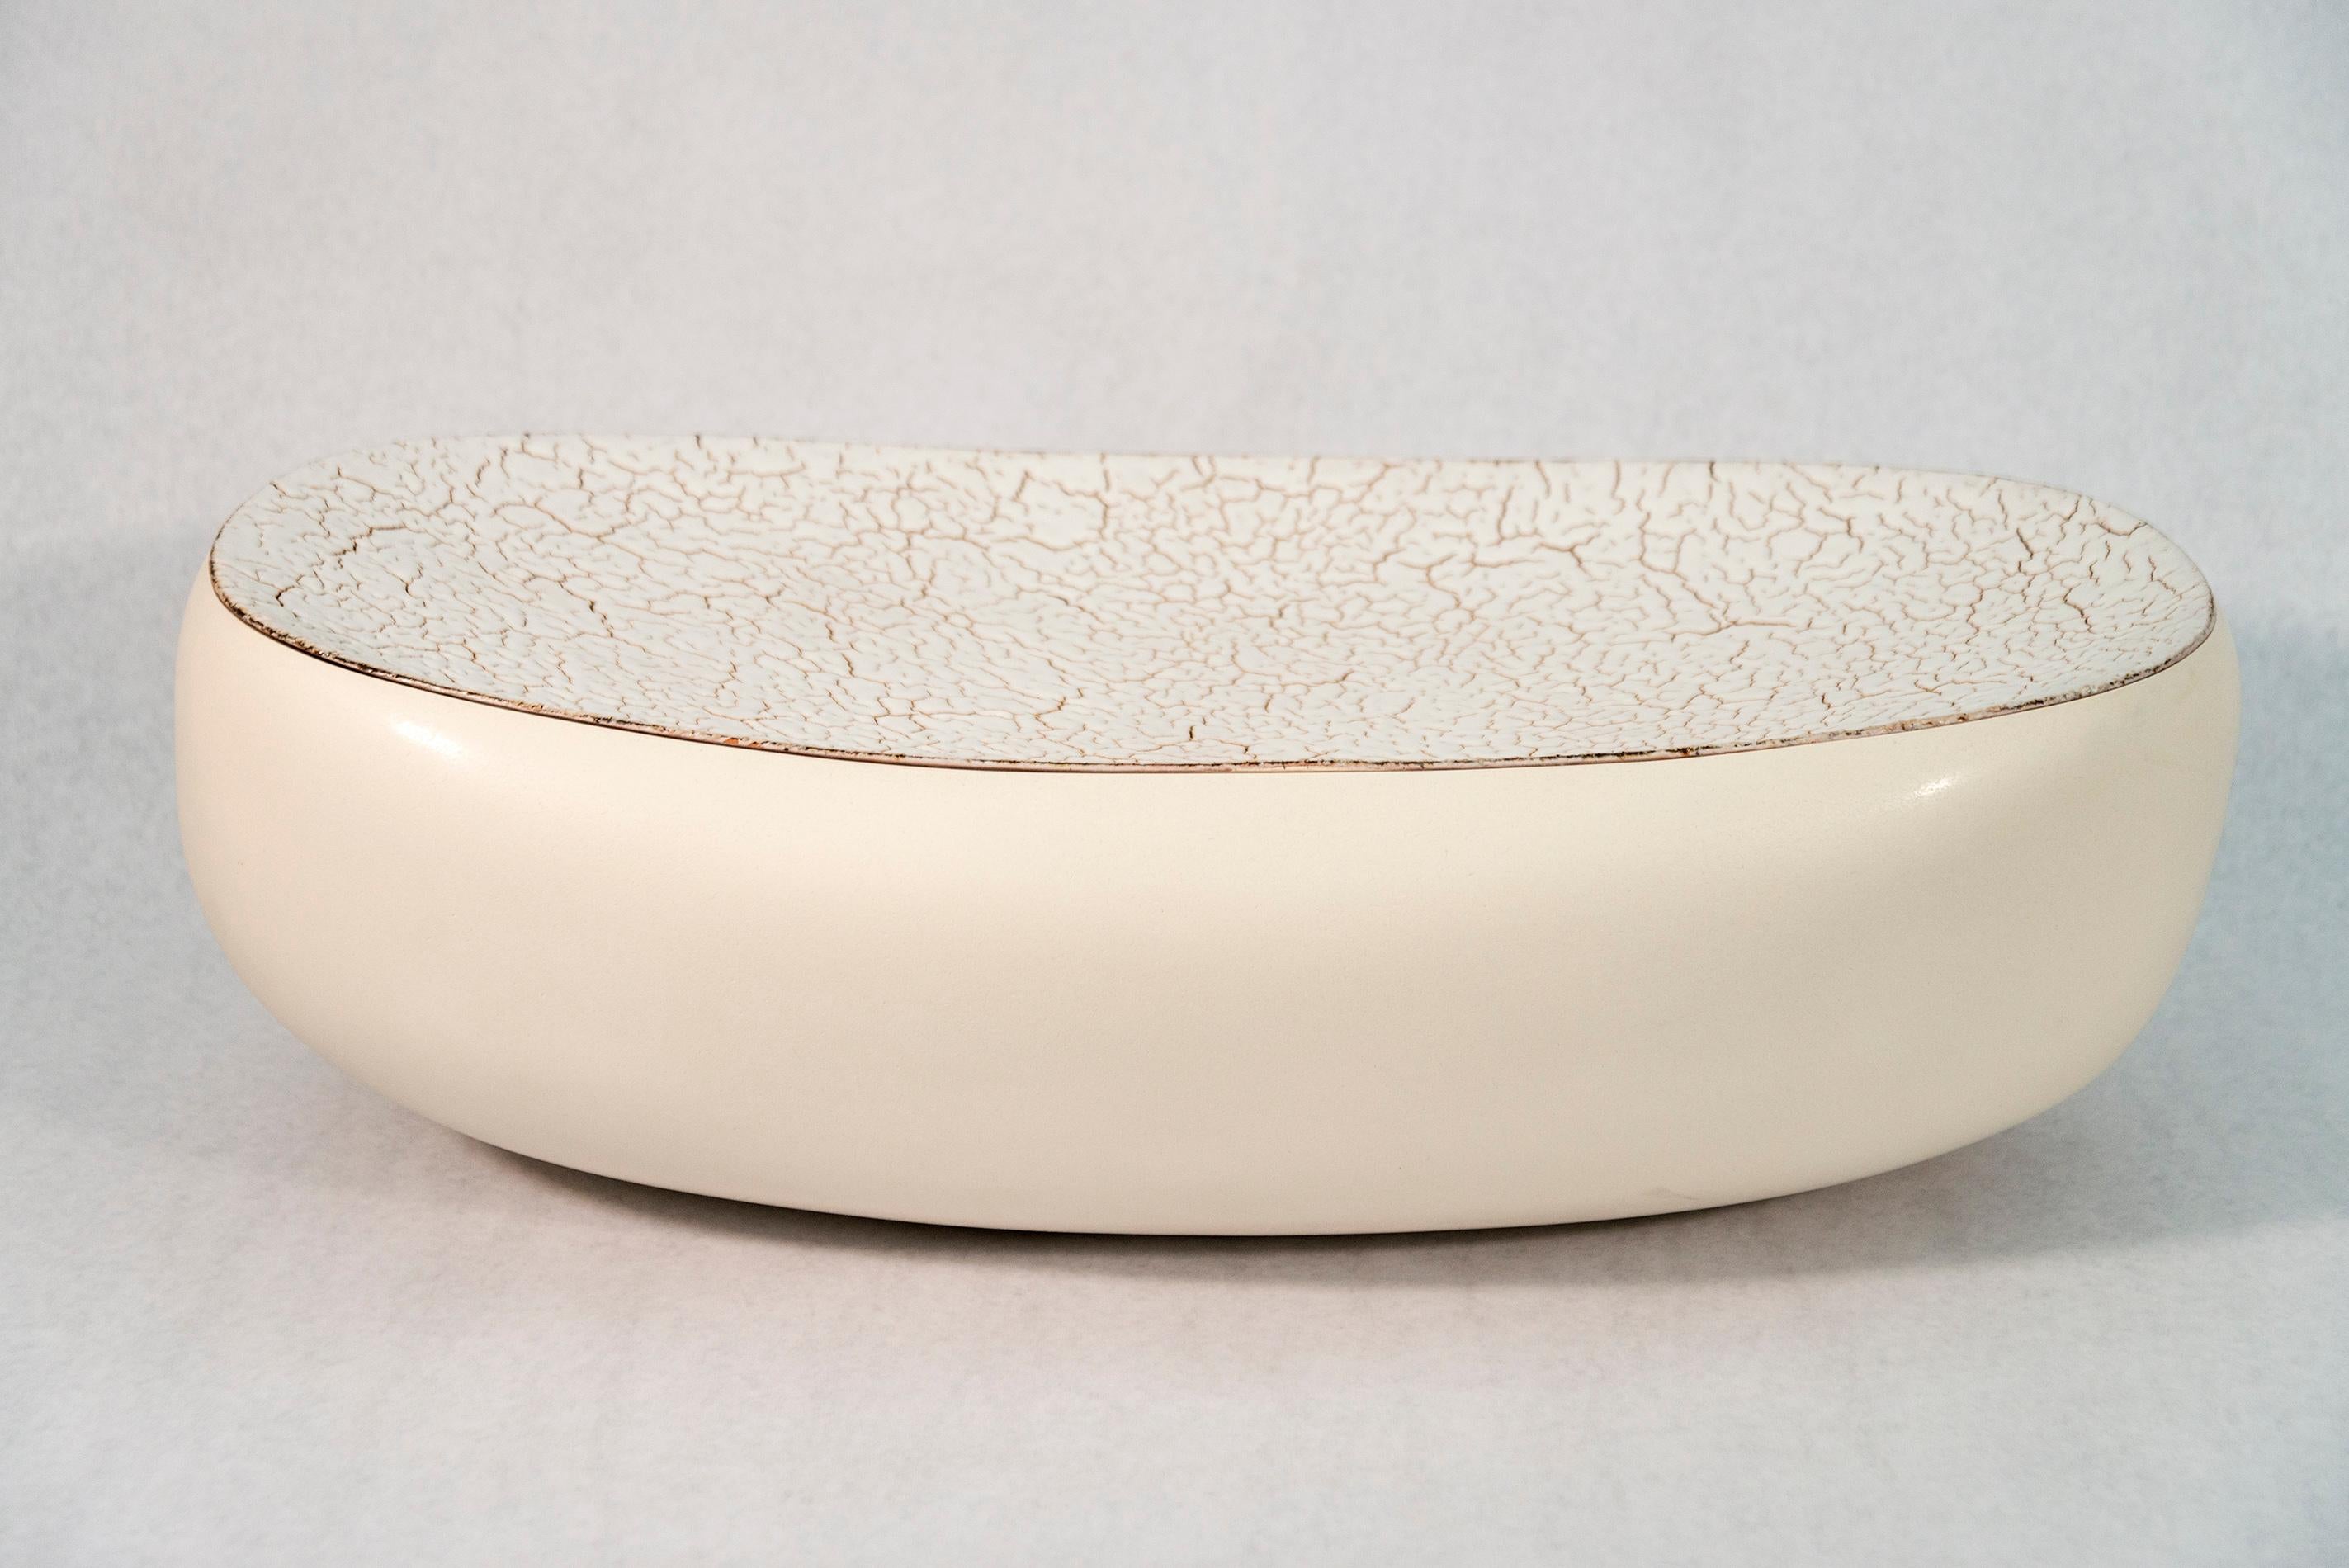 Steven Heinemann Abstract Sculpture - Ellesmere - creamy white, textured, elongated, ceramic art object